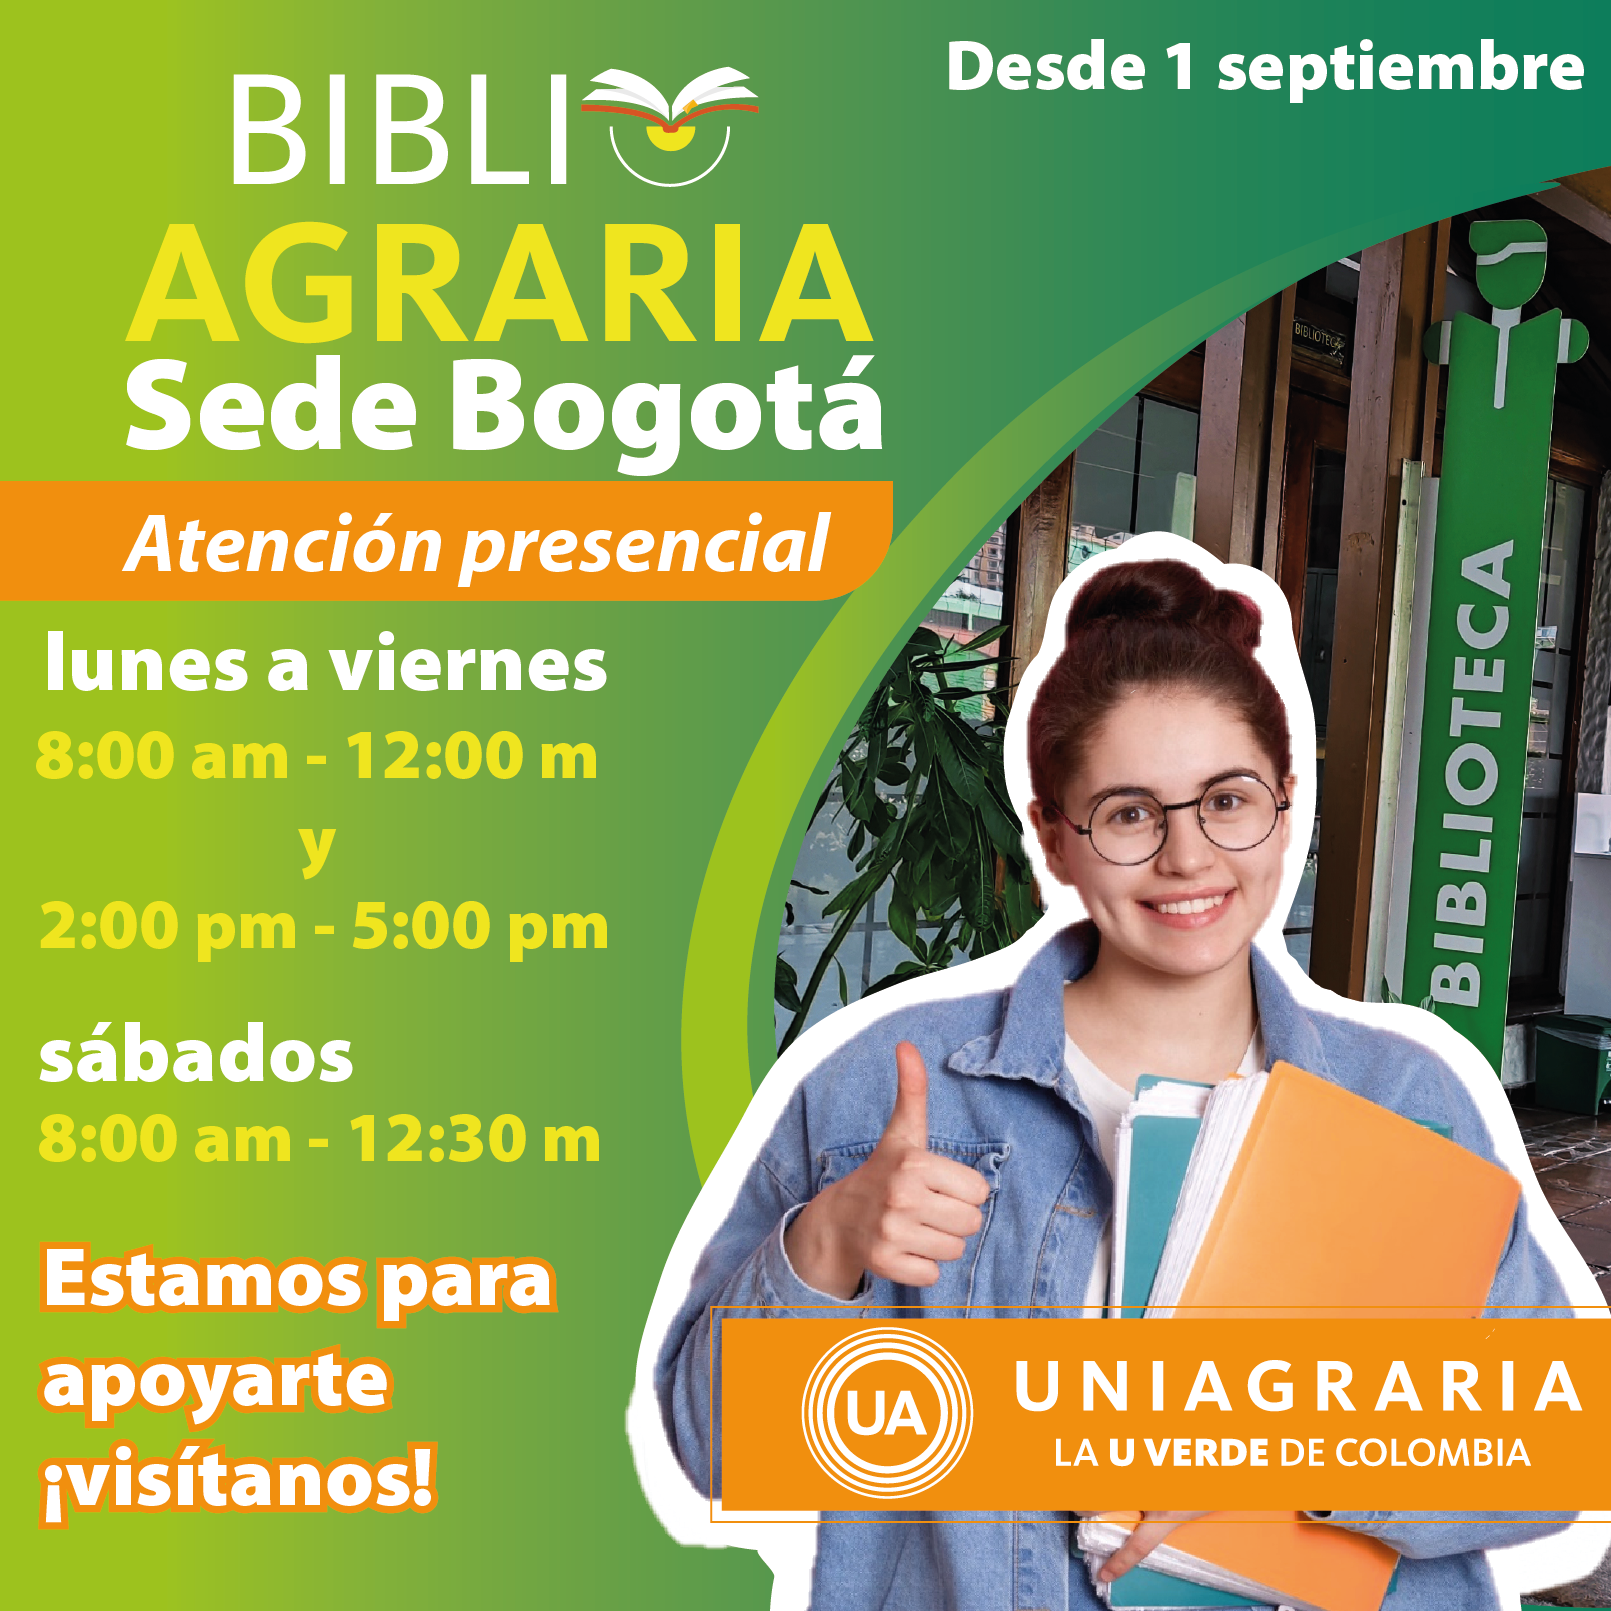 BIBLIOAGRARIA Sede Bogotá: Atención presencial